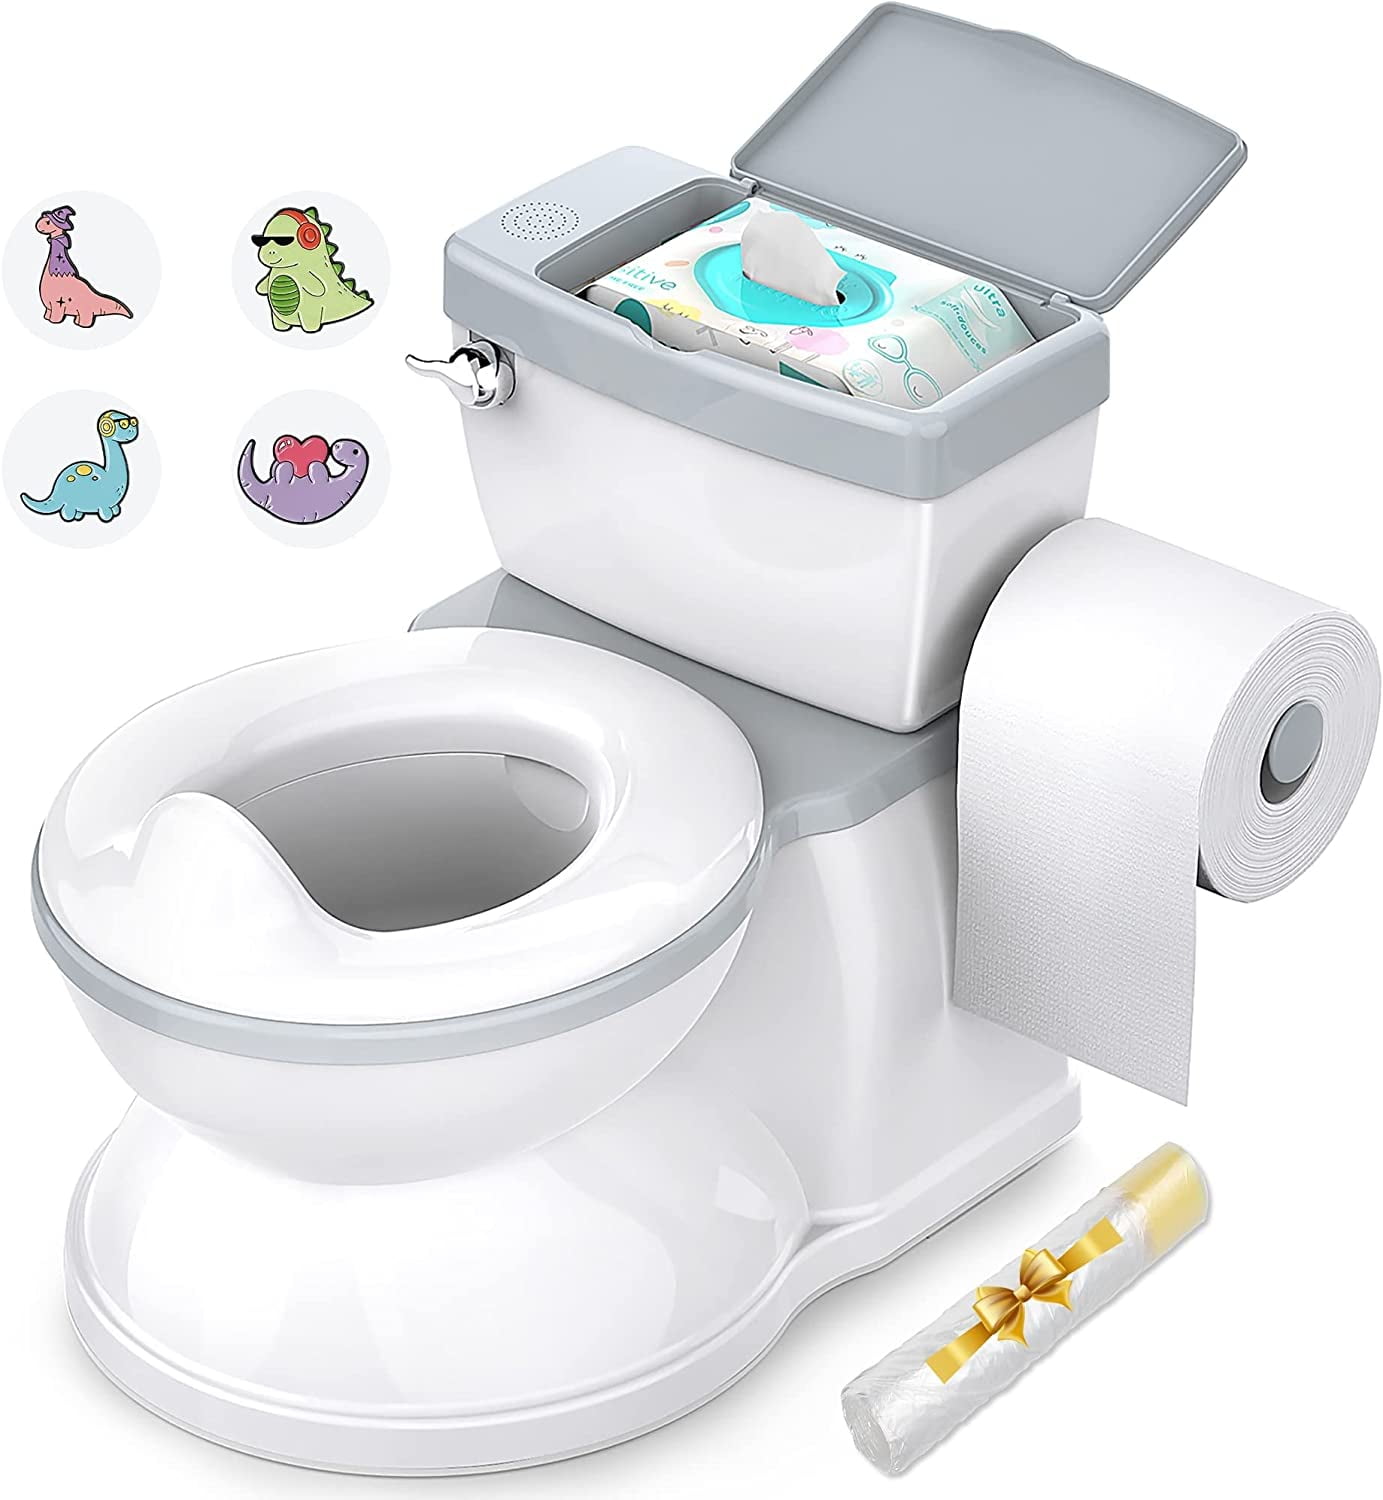 BabyBond Baby Potty Training Toilet with Realistic Flushing Sound ...